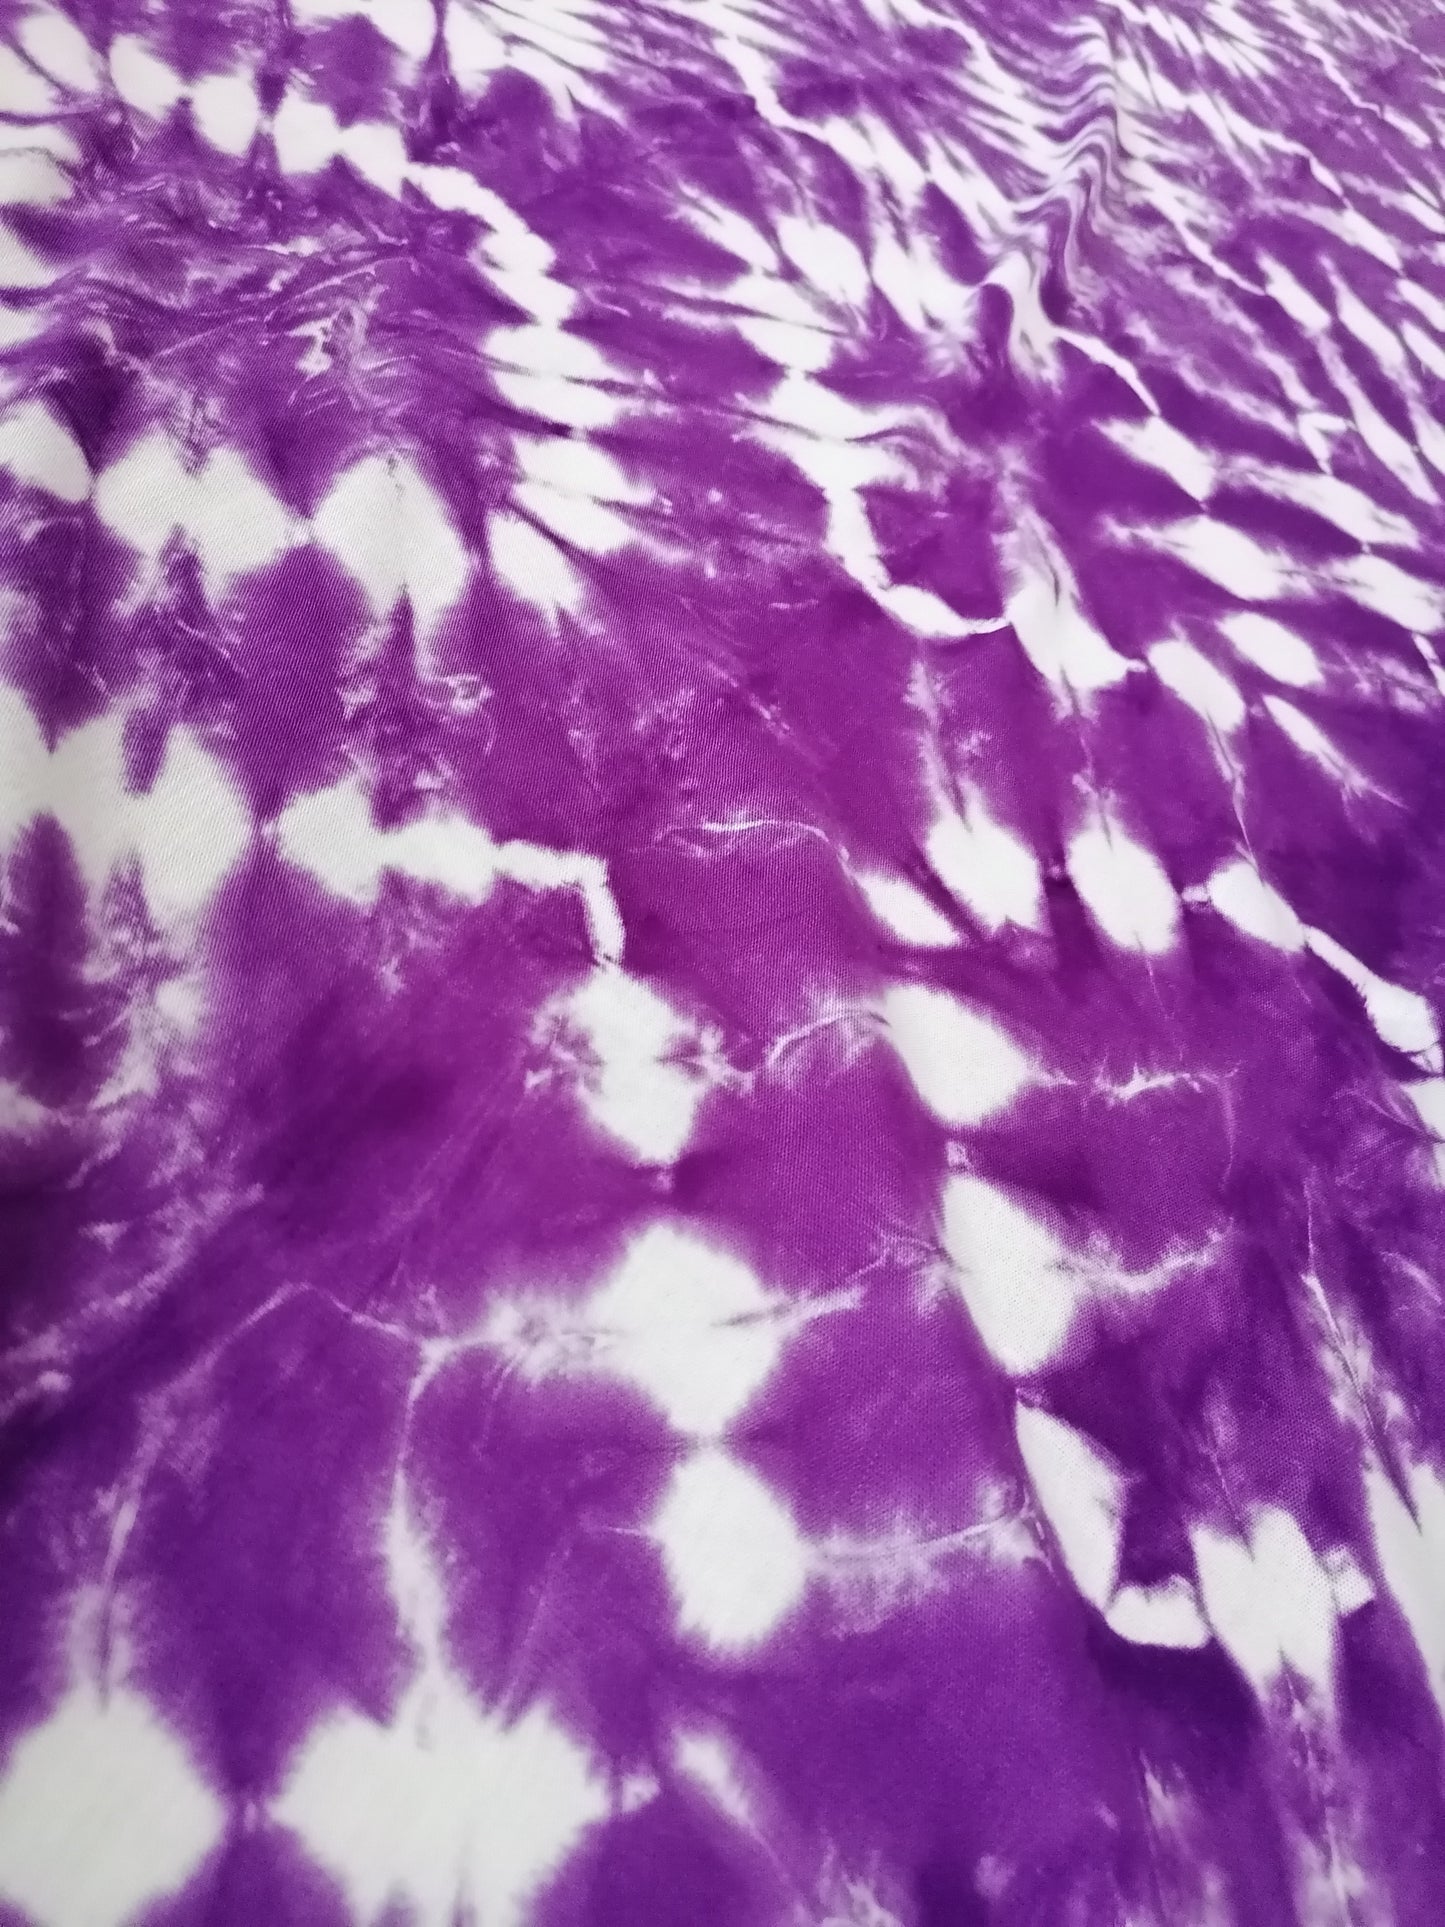 Pareo /sarong /Purple batik